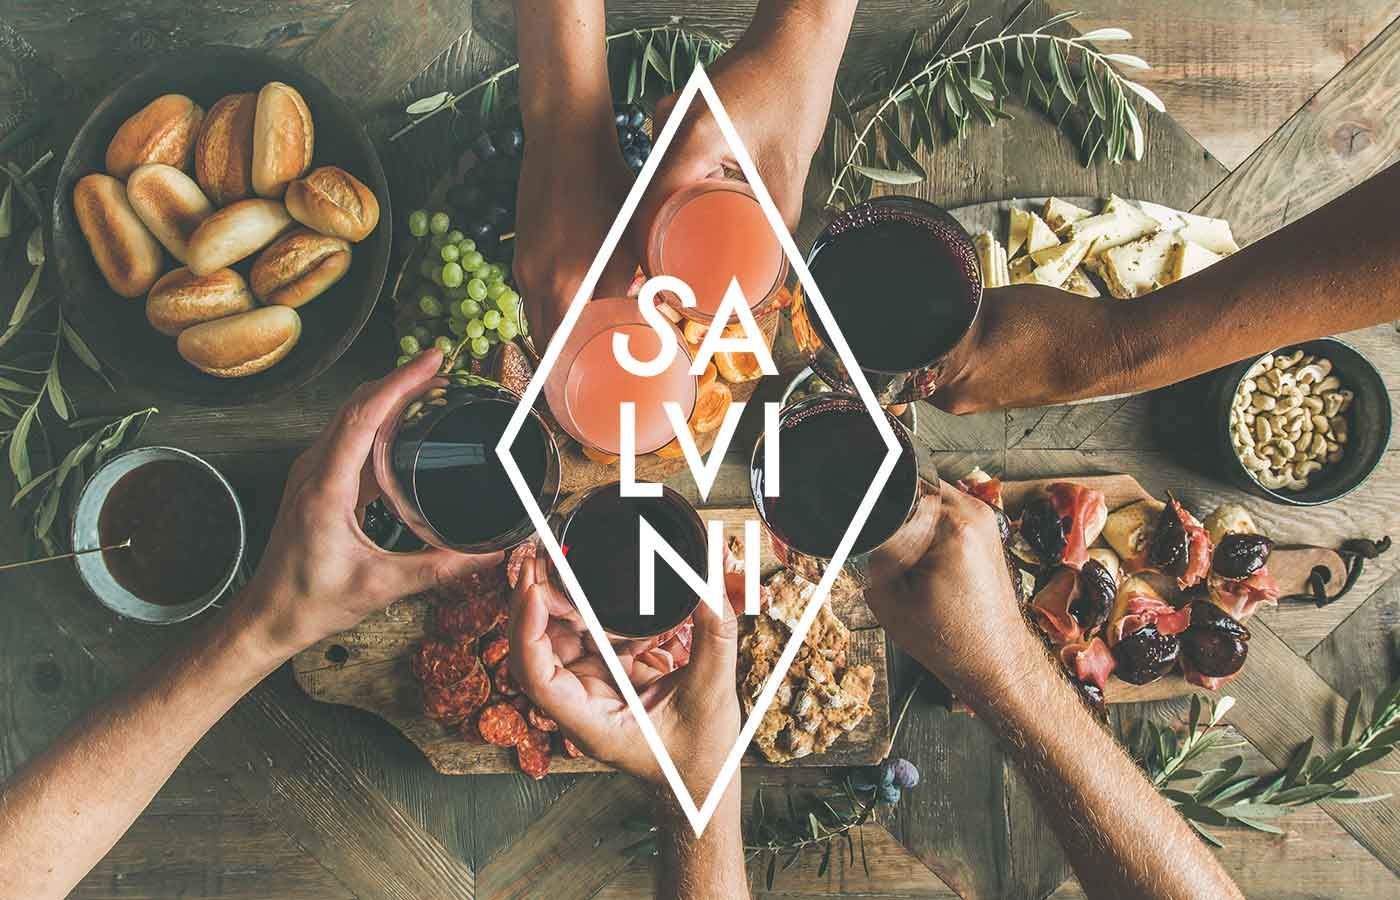 images/work/branding-design-gastronomie-platform-8-ristorante-salvini-korntal.jpg